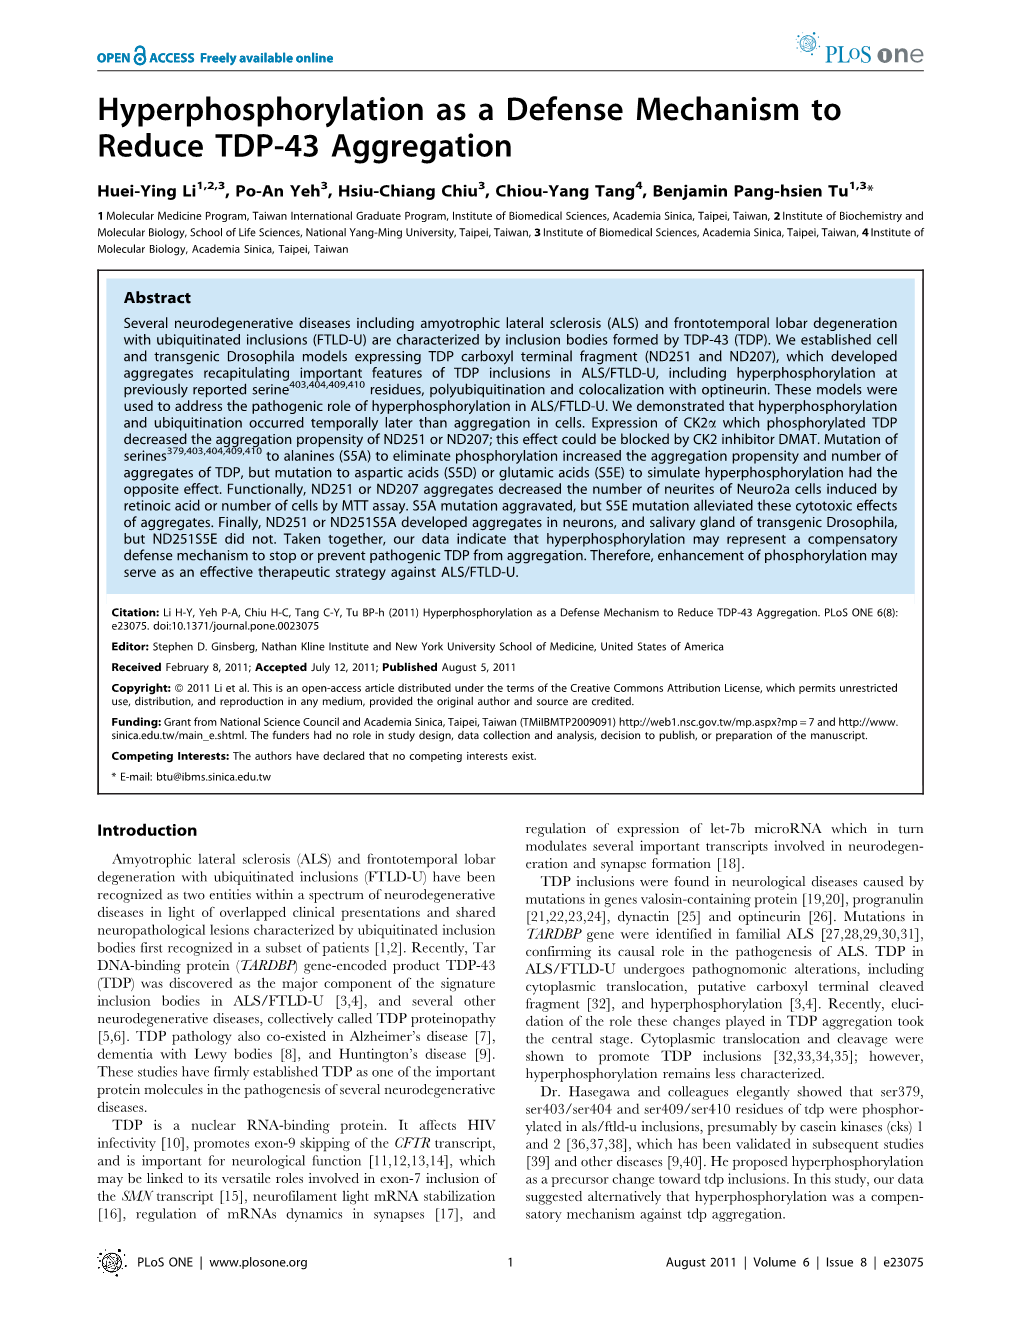 Hyperphosphorylation As a Defense Mechanism to Reduce TDP-43 Aggregation